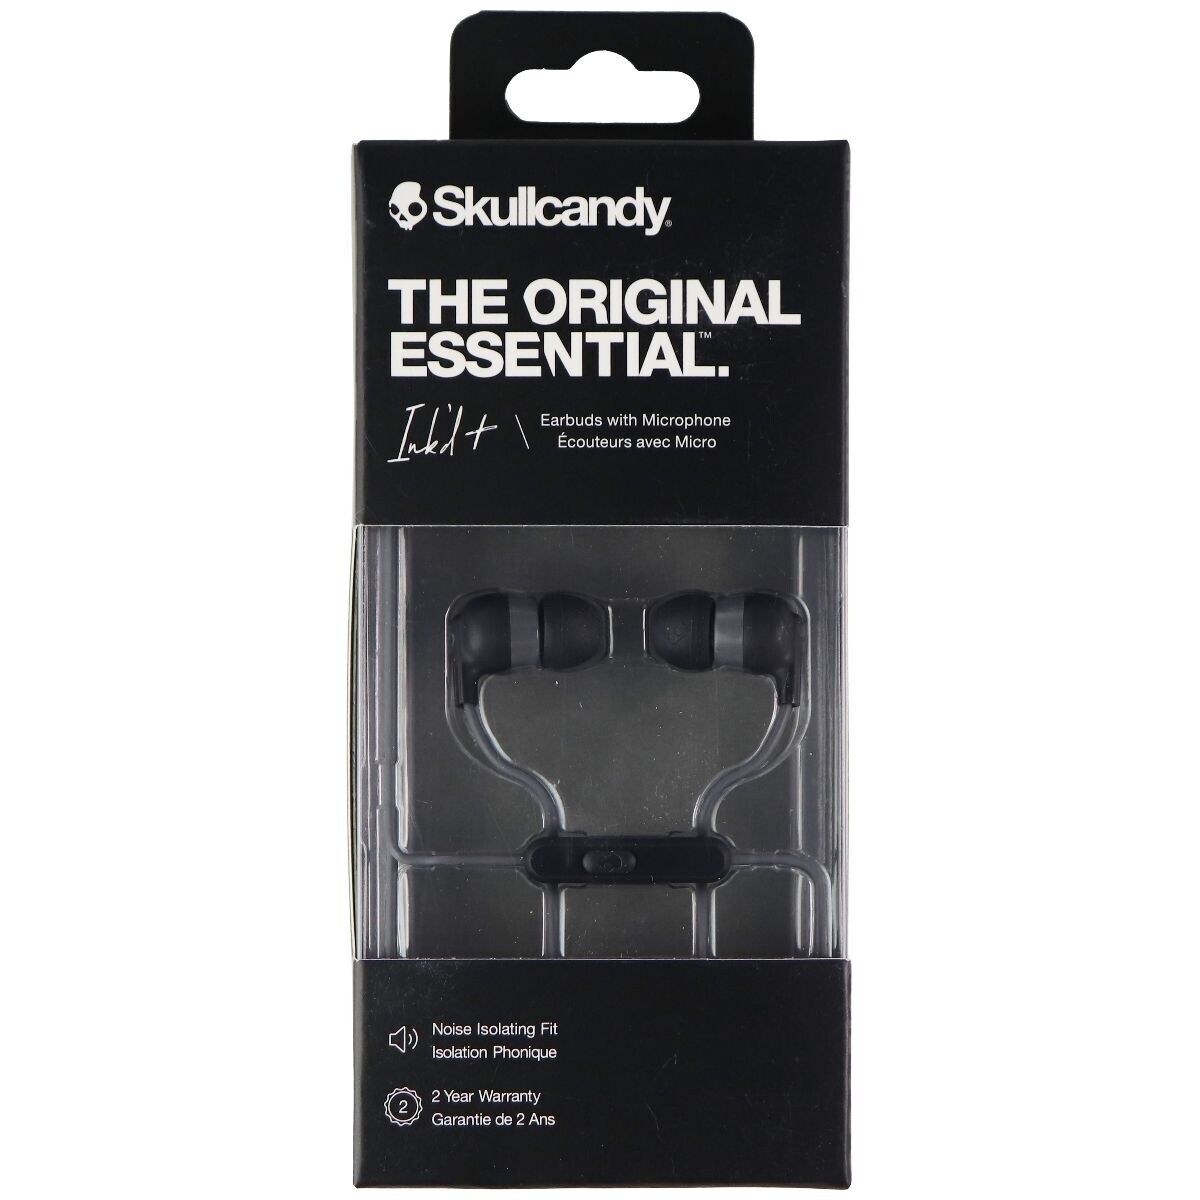 Skullcandy - Ink'D+ Wired In-Ear Headphones - Black